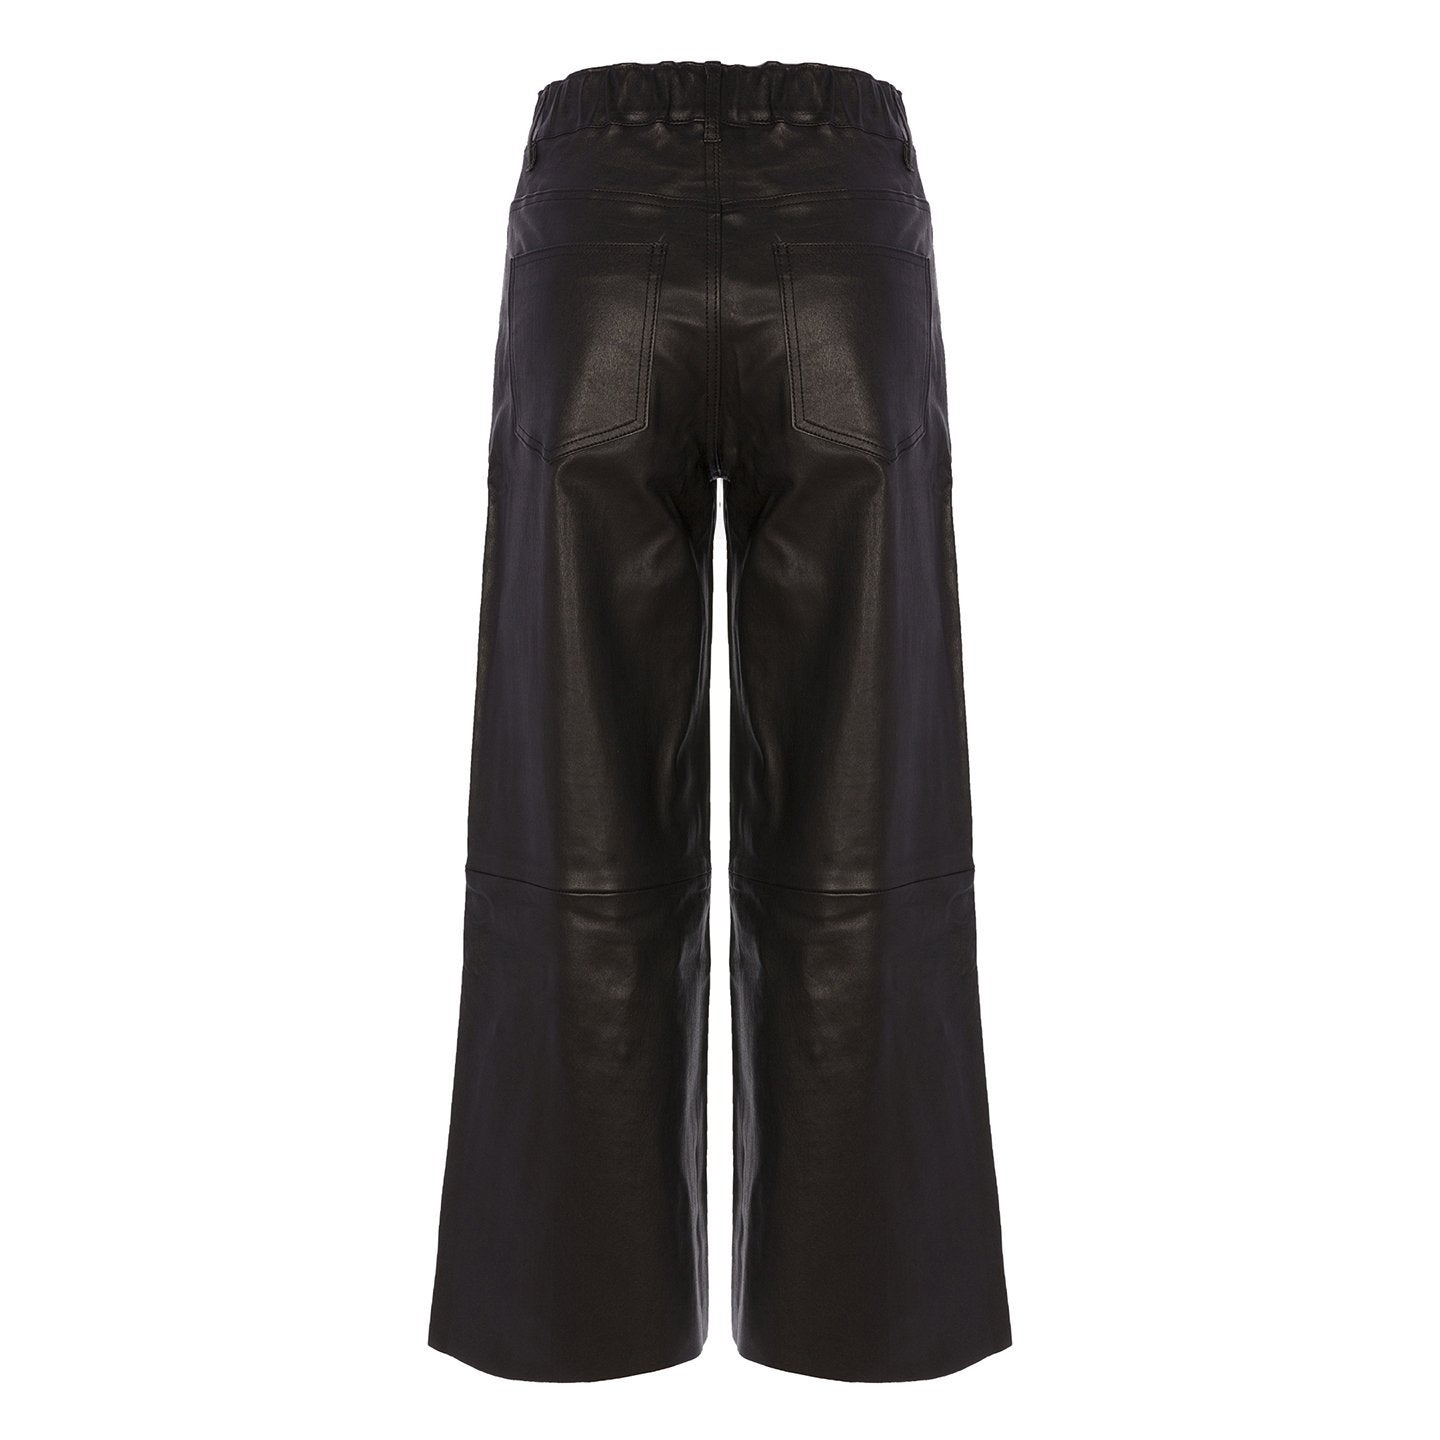 Black wide leg leather pant by Mon&Pau